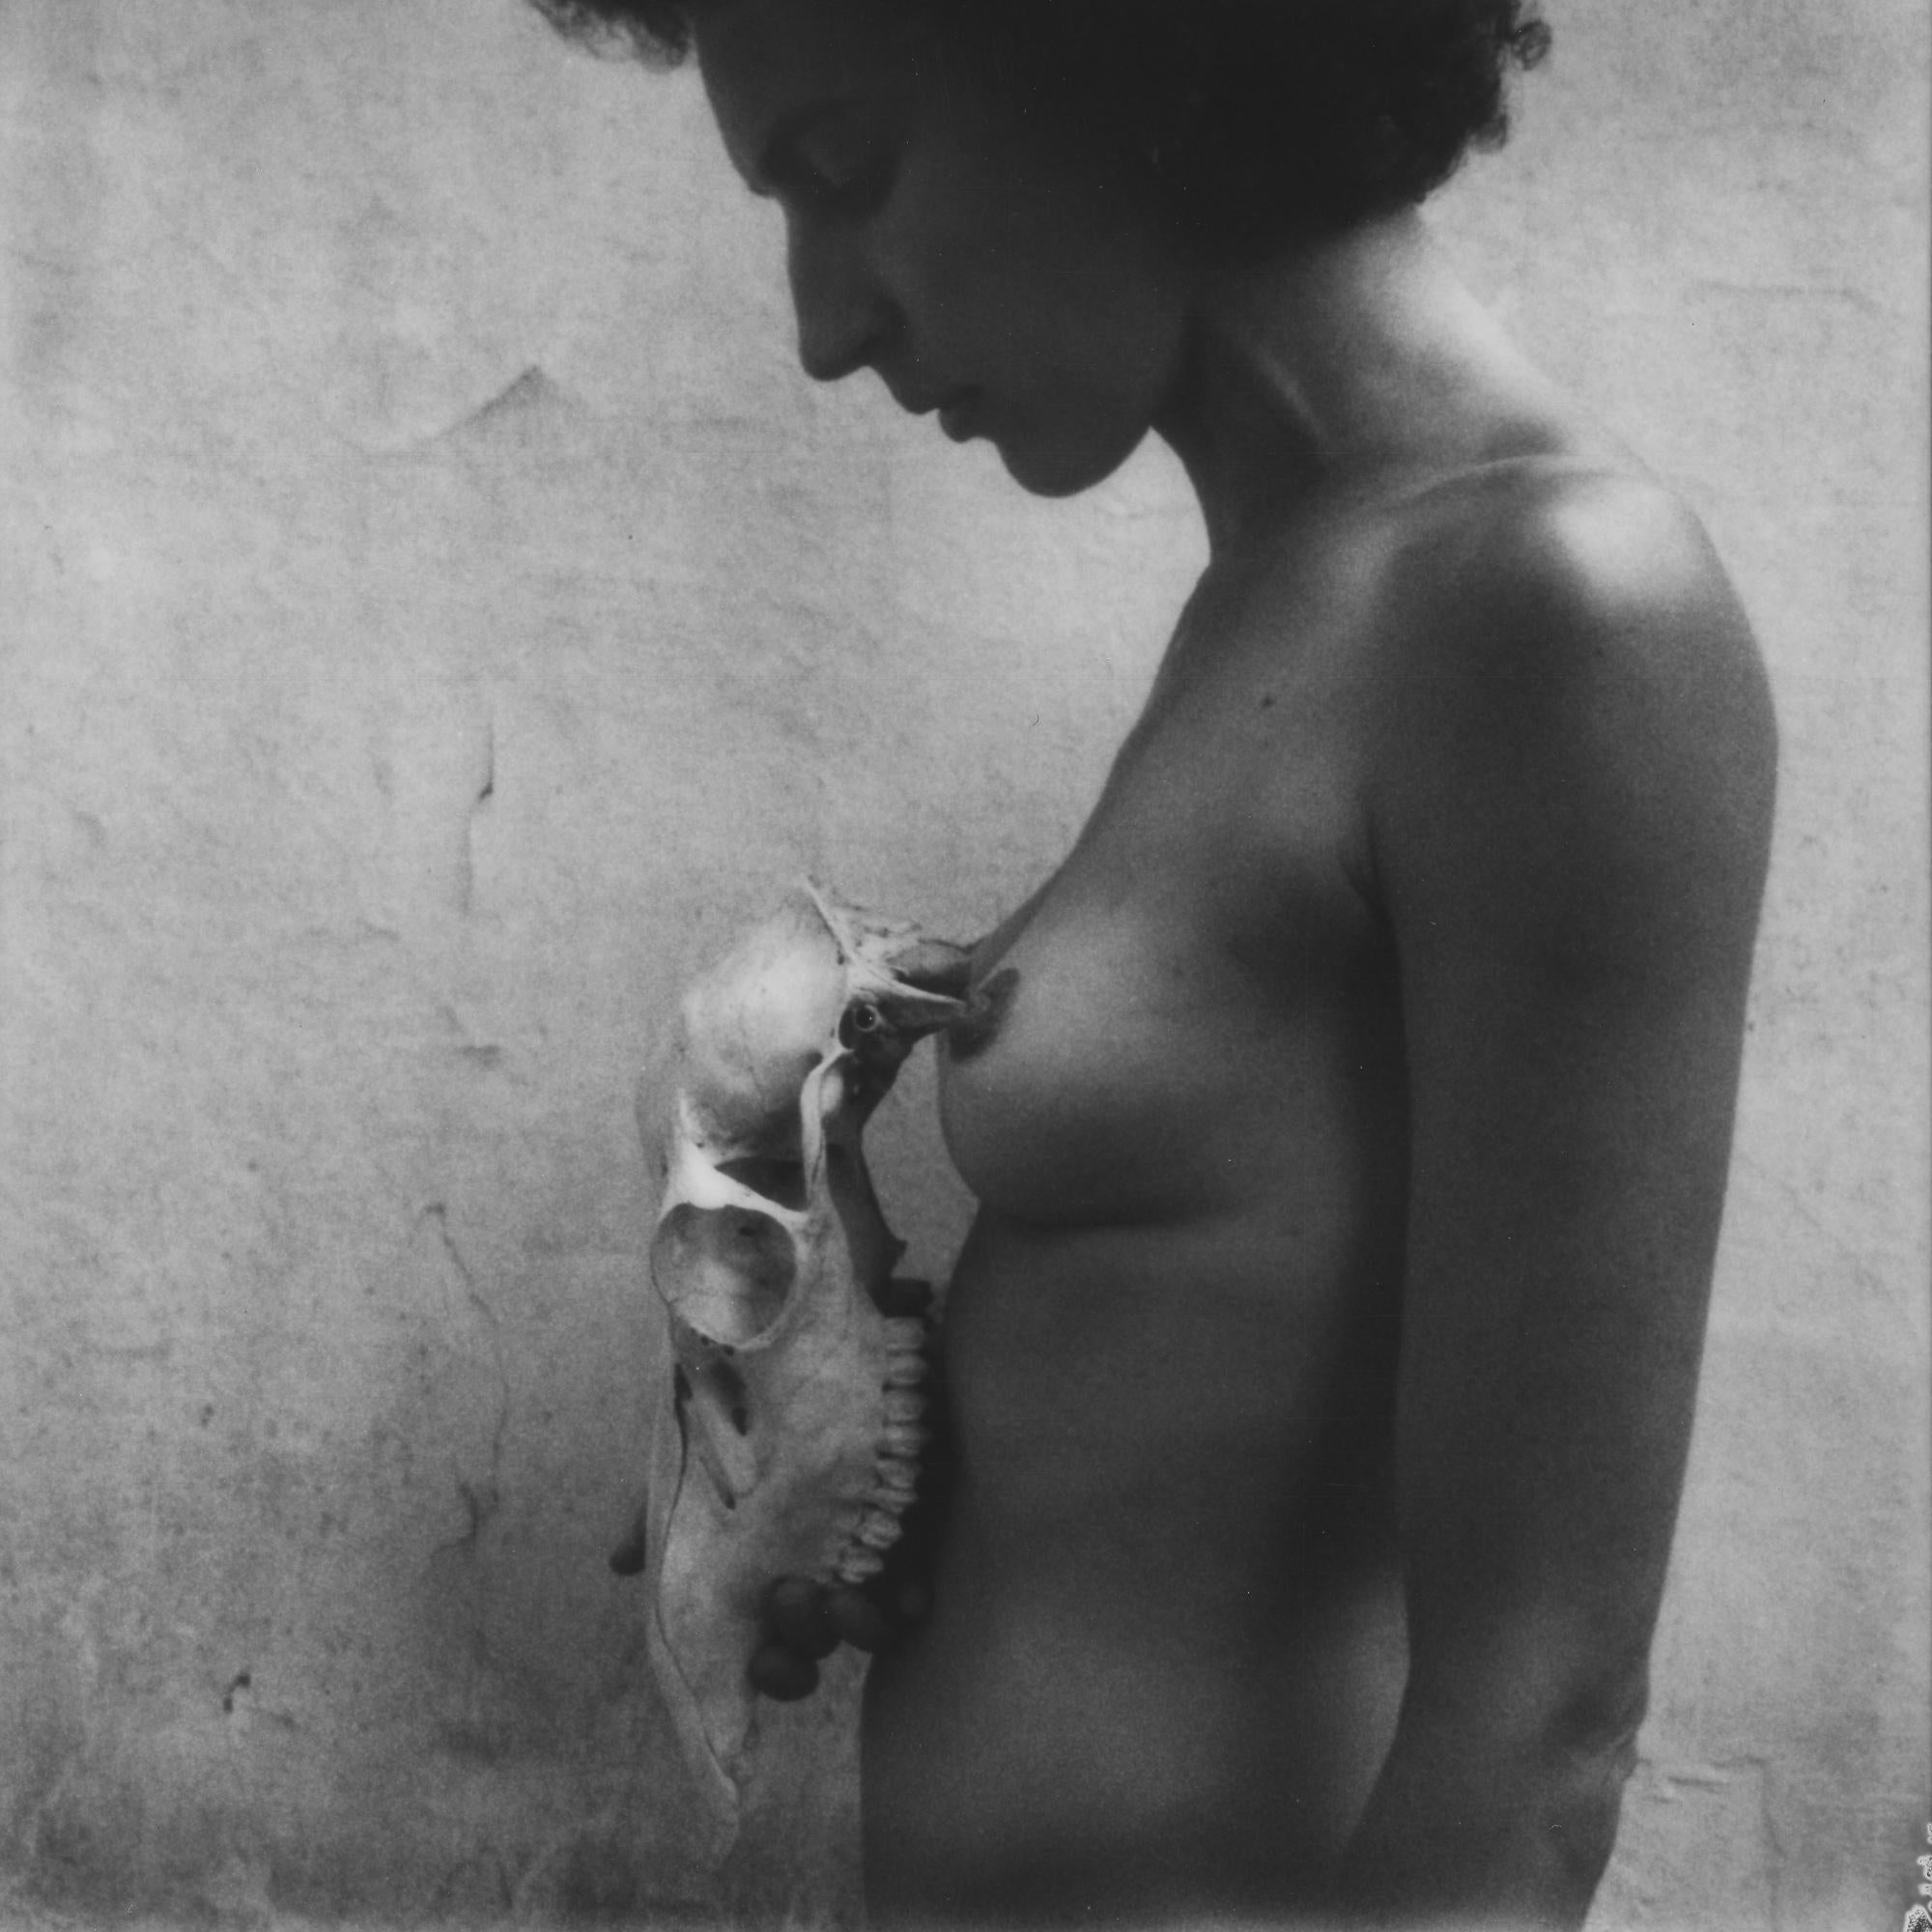 Skin and Bones IV - 21st Century, Polaroid, Nude Photography, Contemporary, B&W